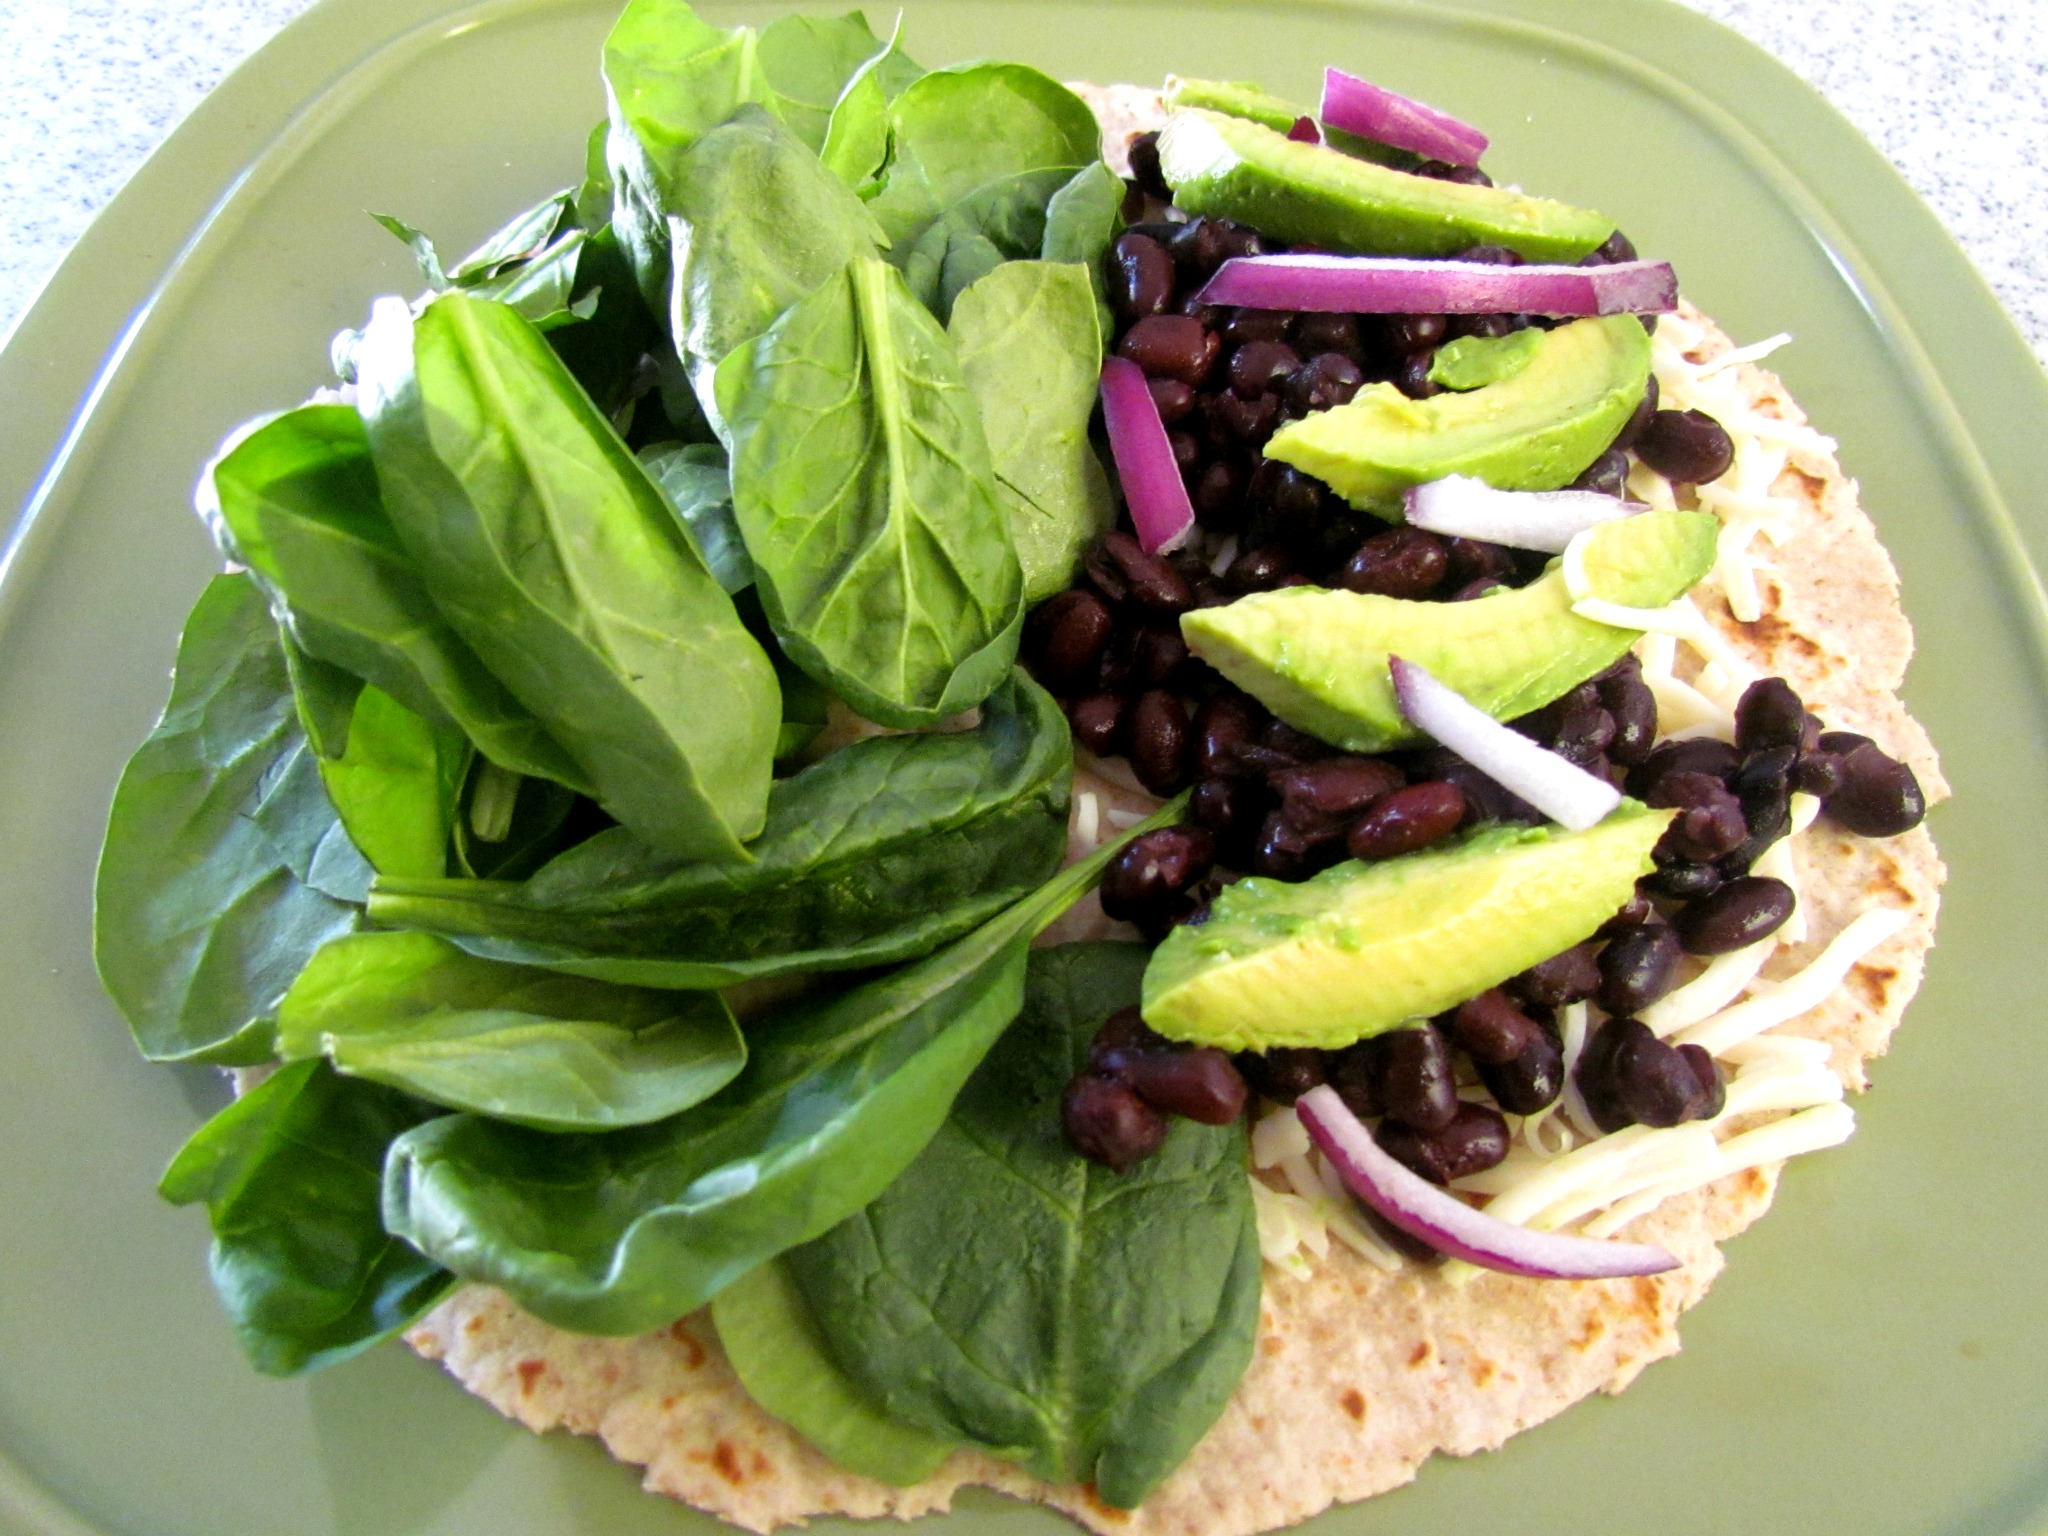 Healthy Recipes Ideas to Celebrate Cinco de Mayo: Easy Black Bean Quesadillas + Vegetarian Chili